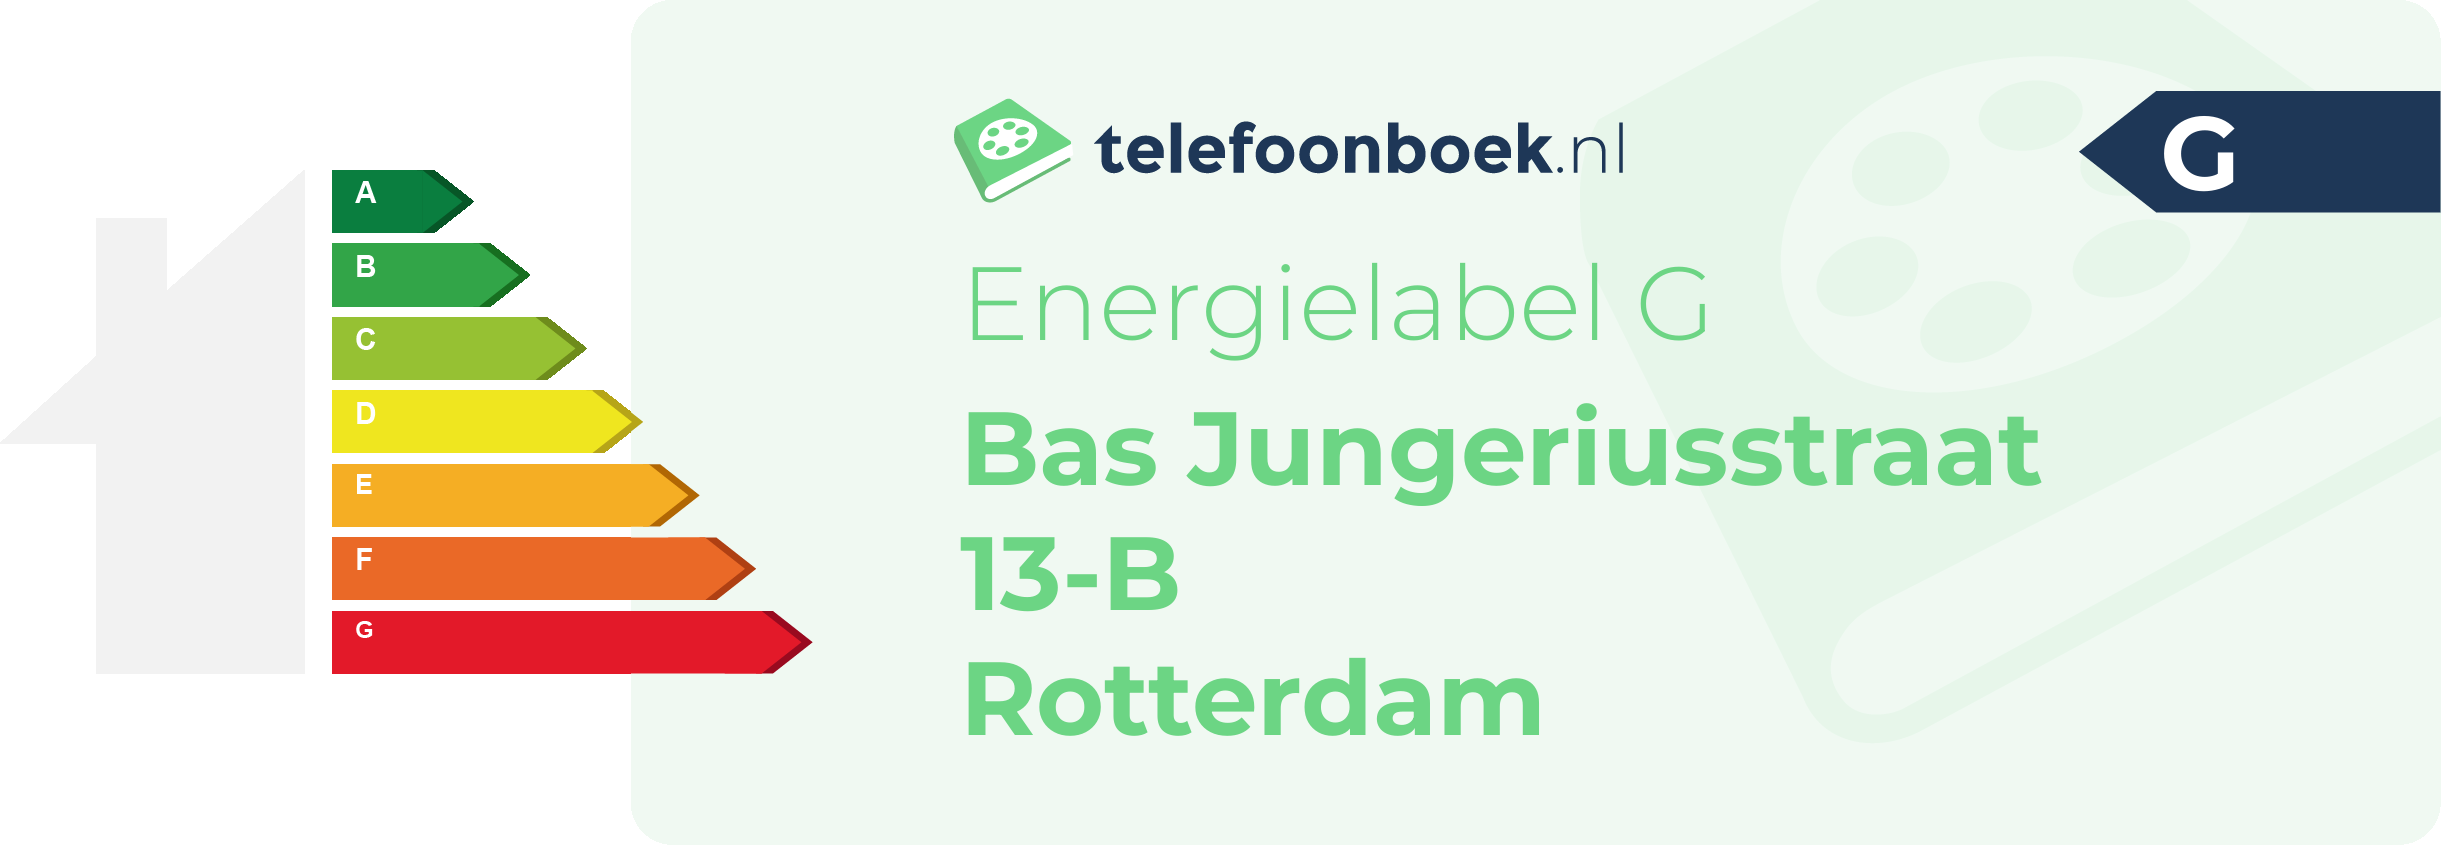 Energielabel Bas Jungeriusstraat 13-B Rotterdam